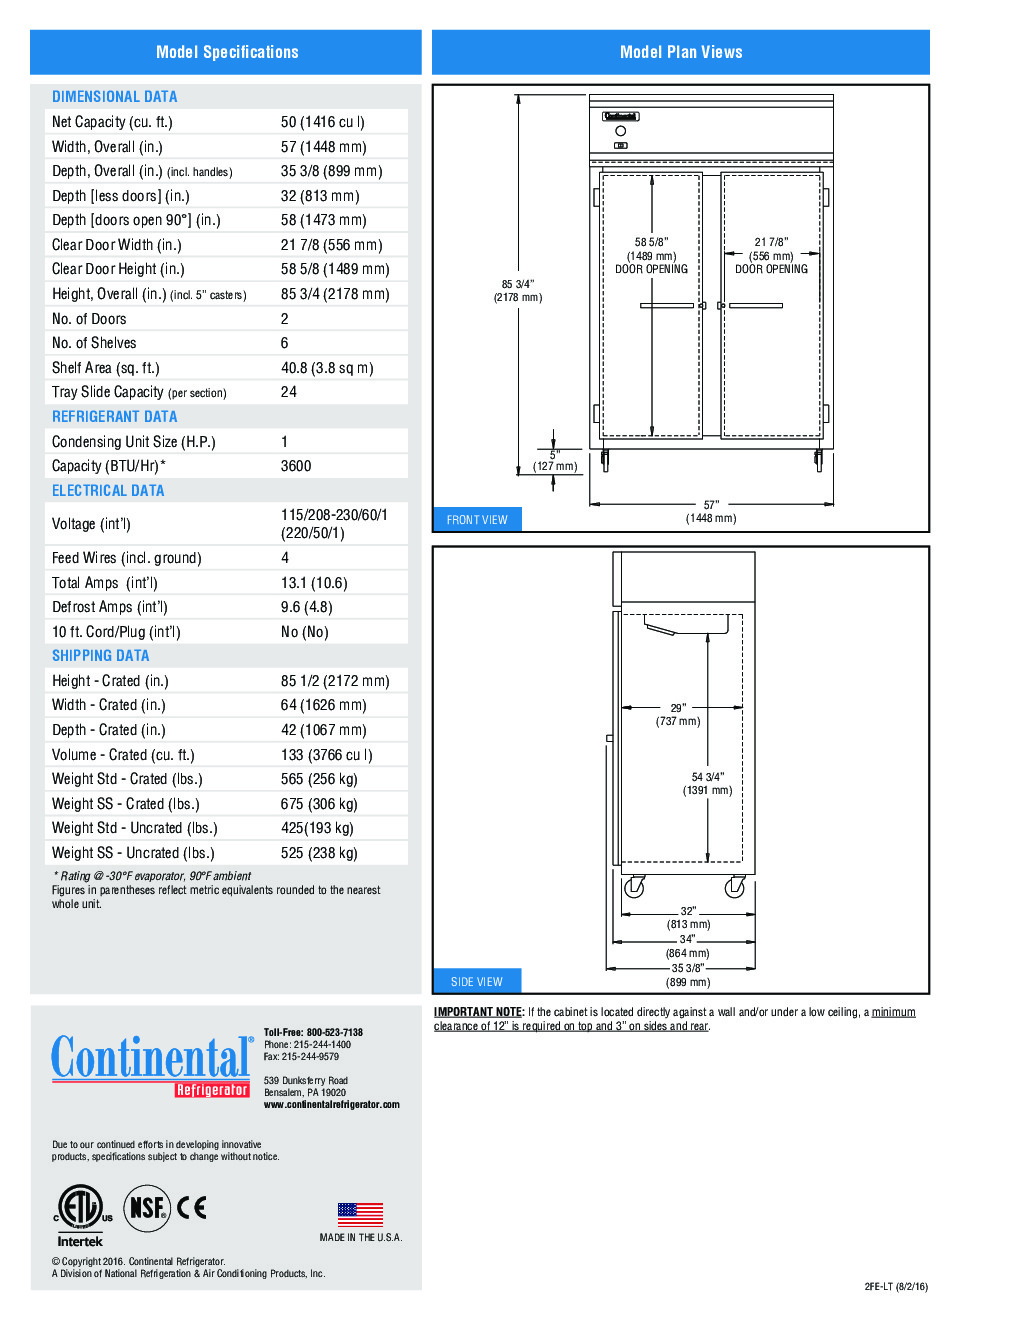 Continental Refrigerator 2FE-LT-SA Reach-In Low Temperature Freezer